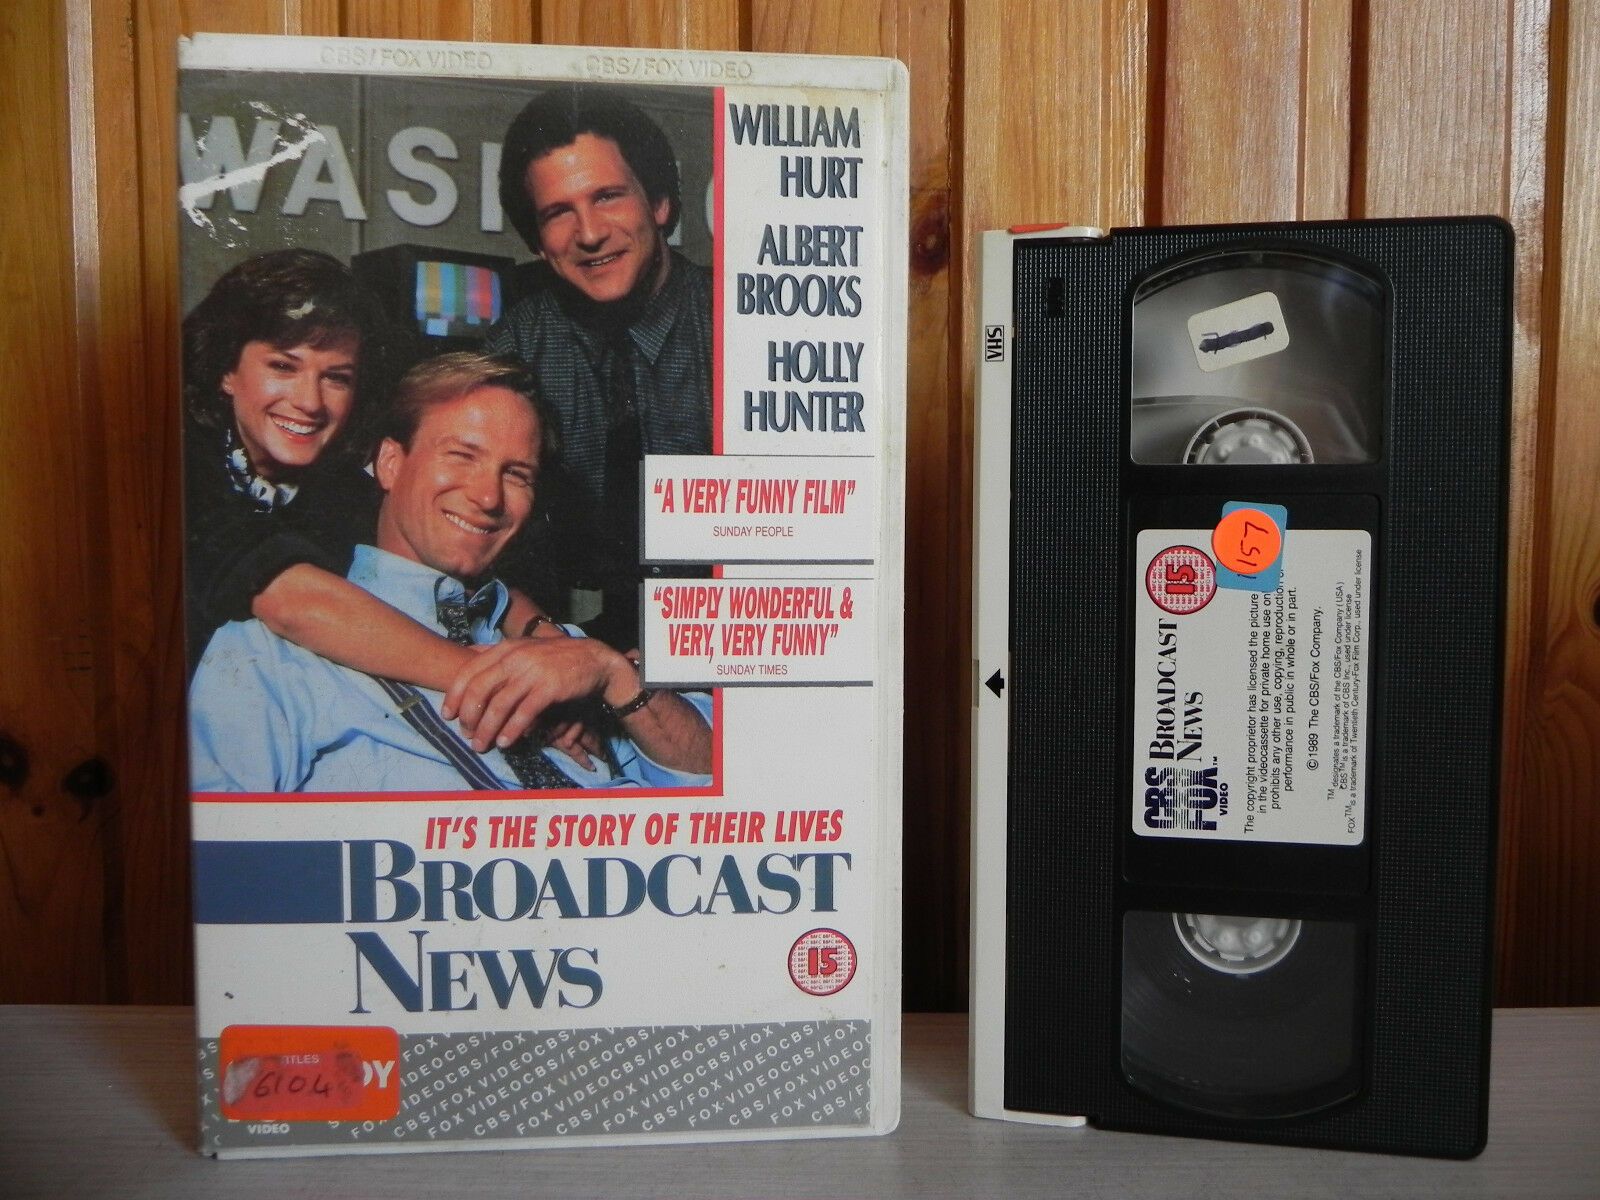 Broadcast News - CBX/FOX - Comedy - William Hurt - Albert Brook - Pal VHS-